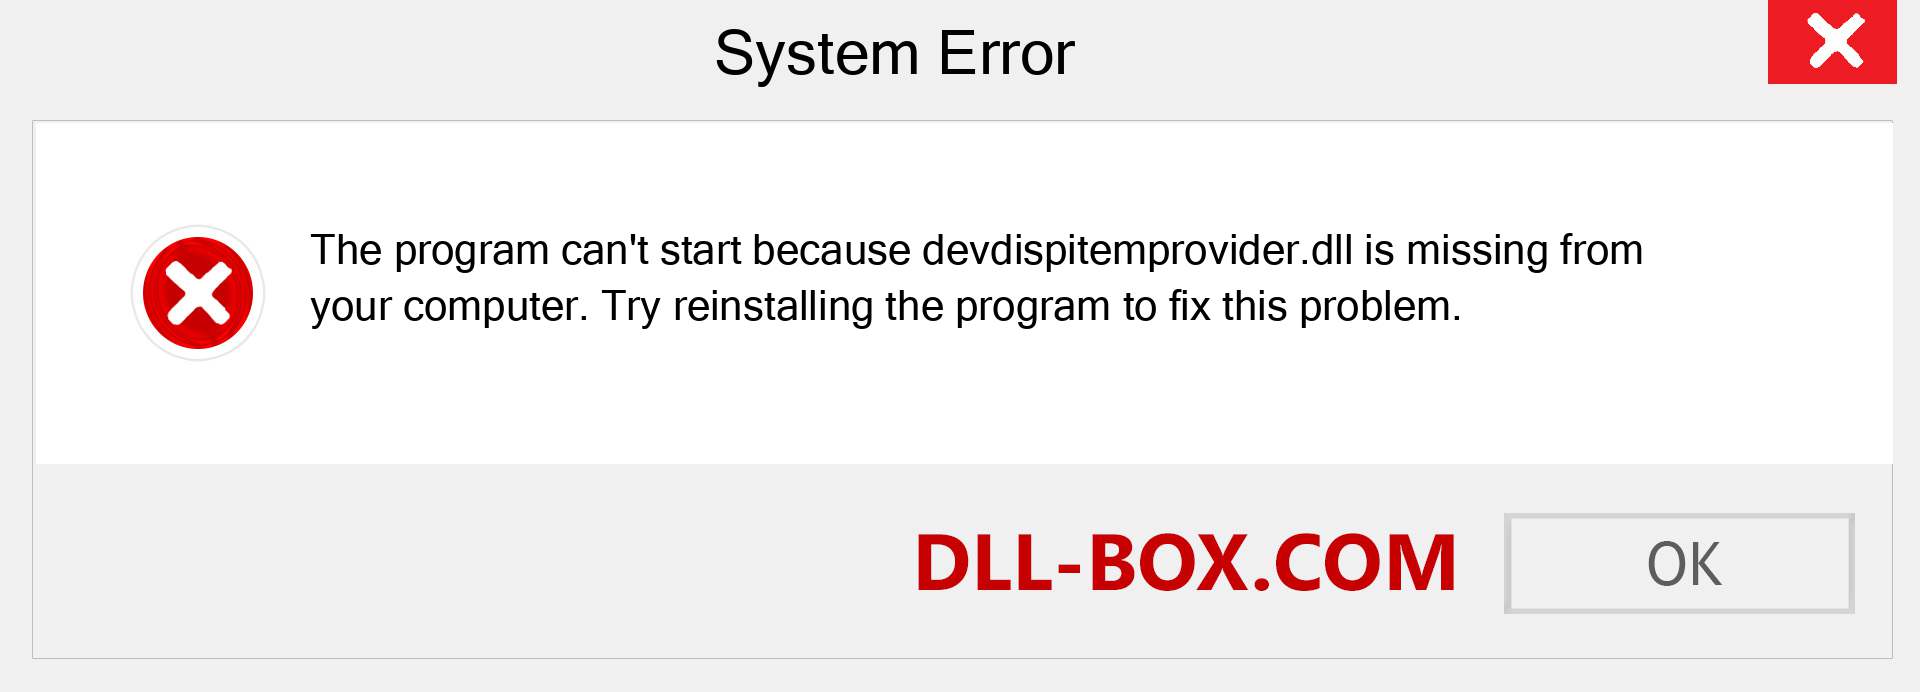  devdispitemprovider.dll file is missing?. Download for Windows 7, 8, 10 - Fix  devdispitemprovider dll Missing Error on Windows, photos, images